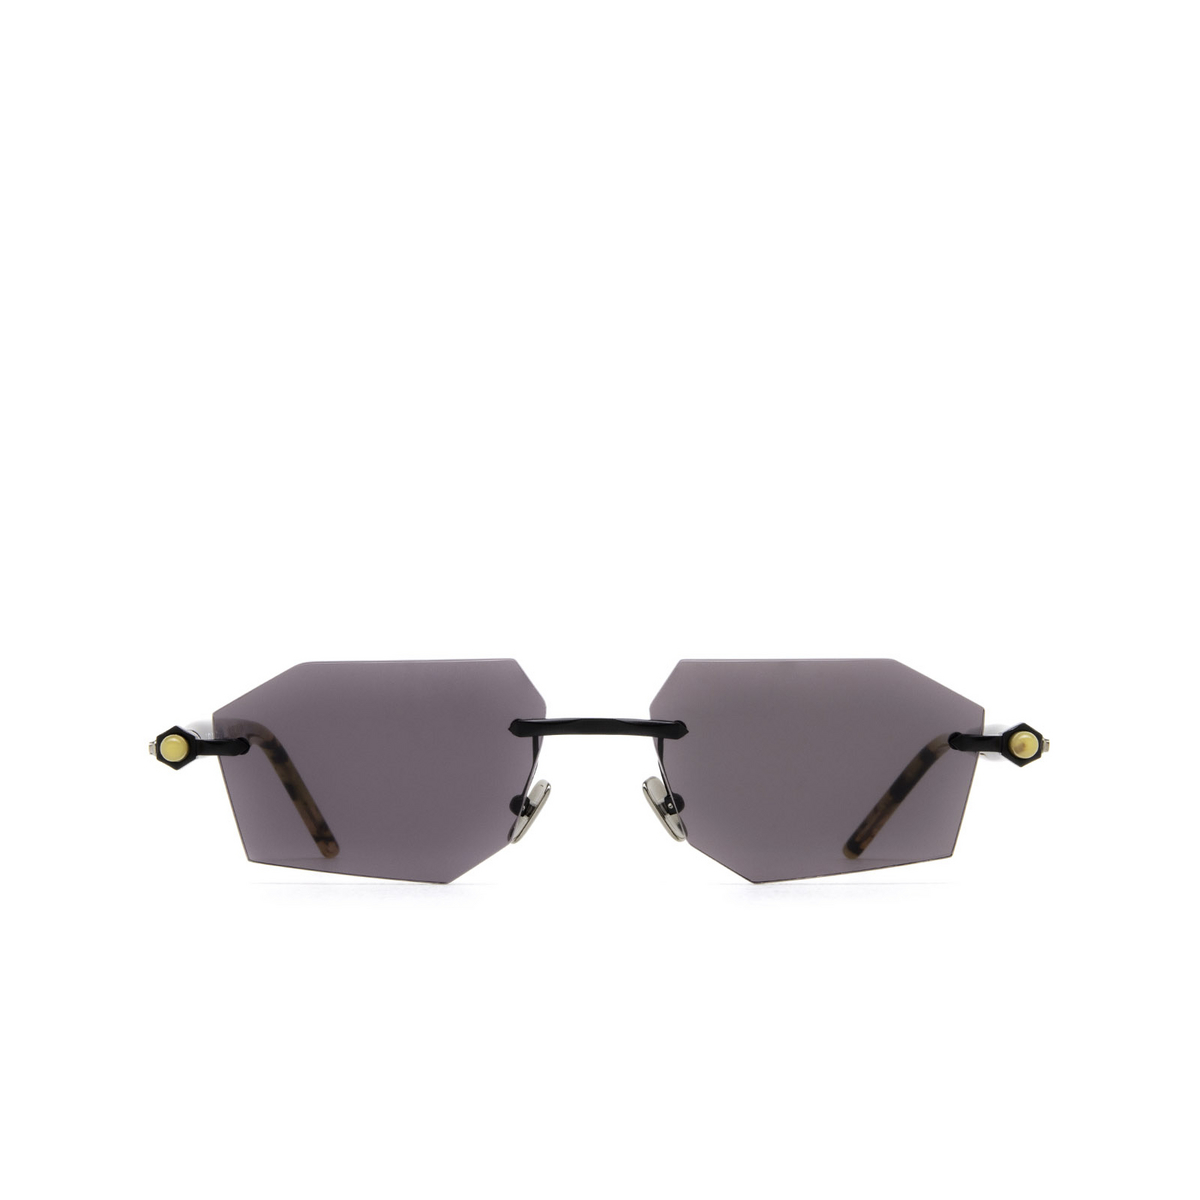 Kuboraum® Irregular Sunglasses: P55 color Bm Tr Black Matt & Black Shine Tortoise - front view